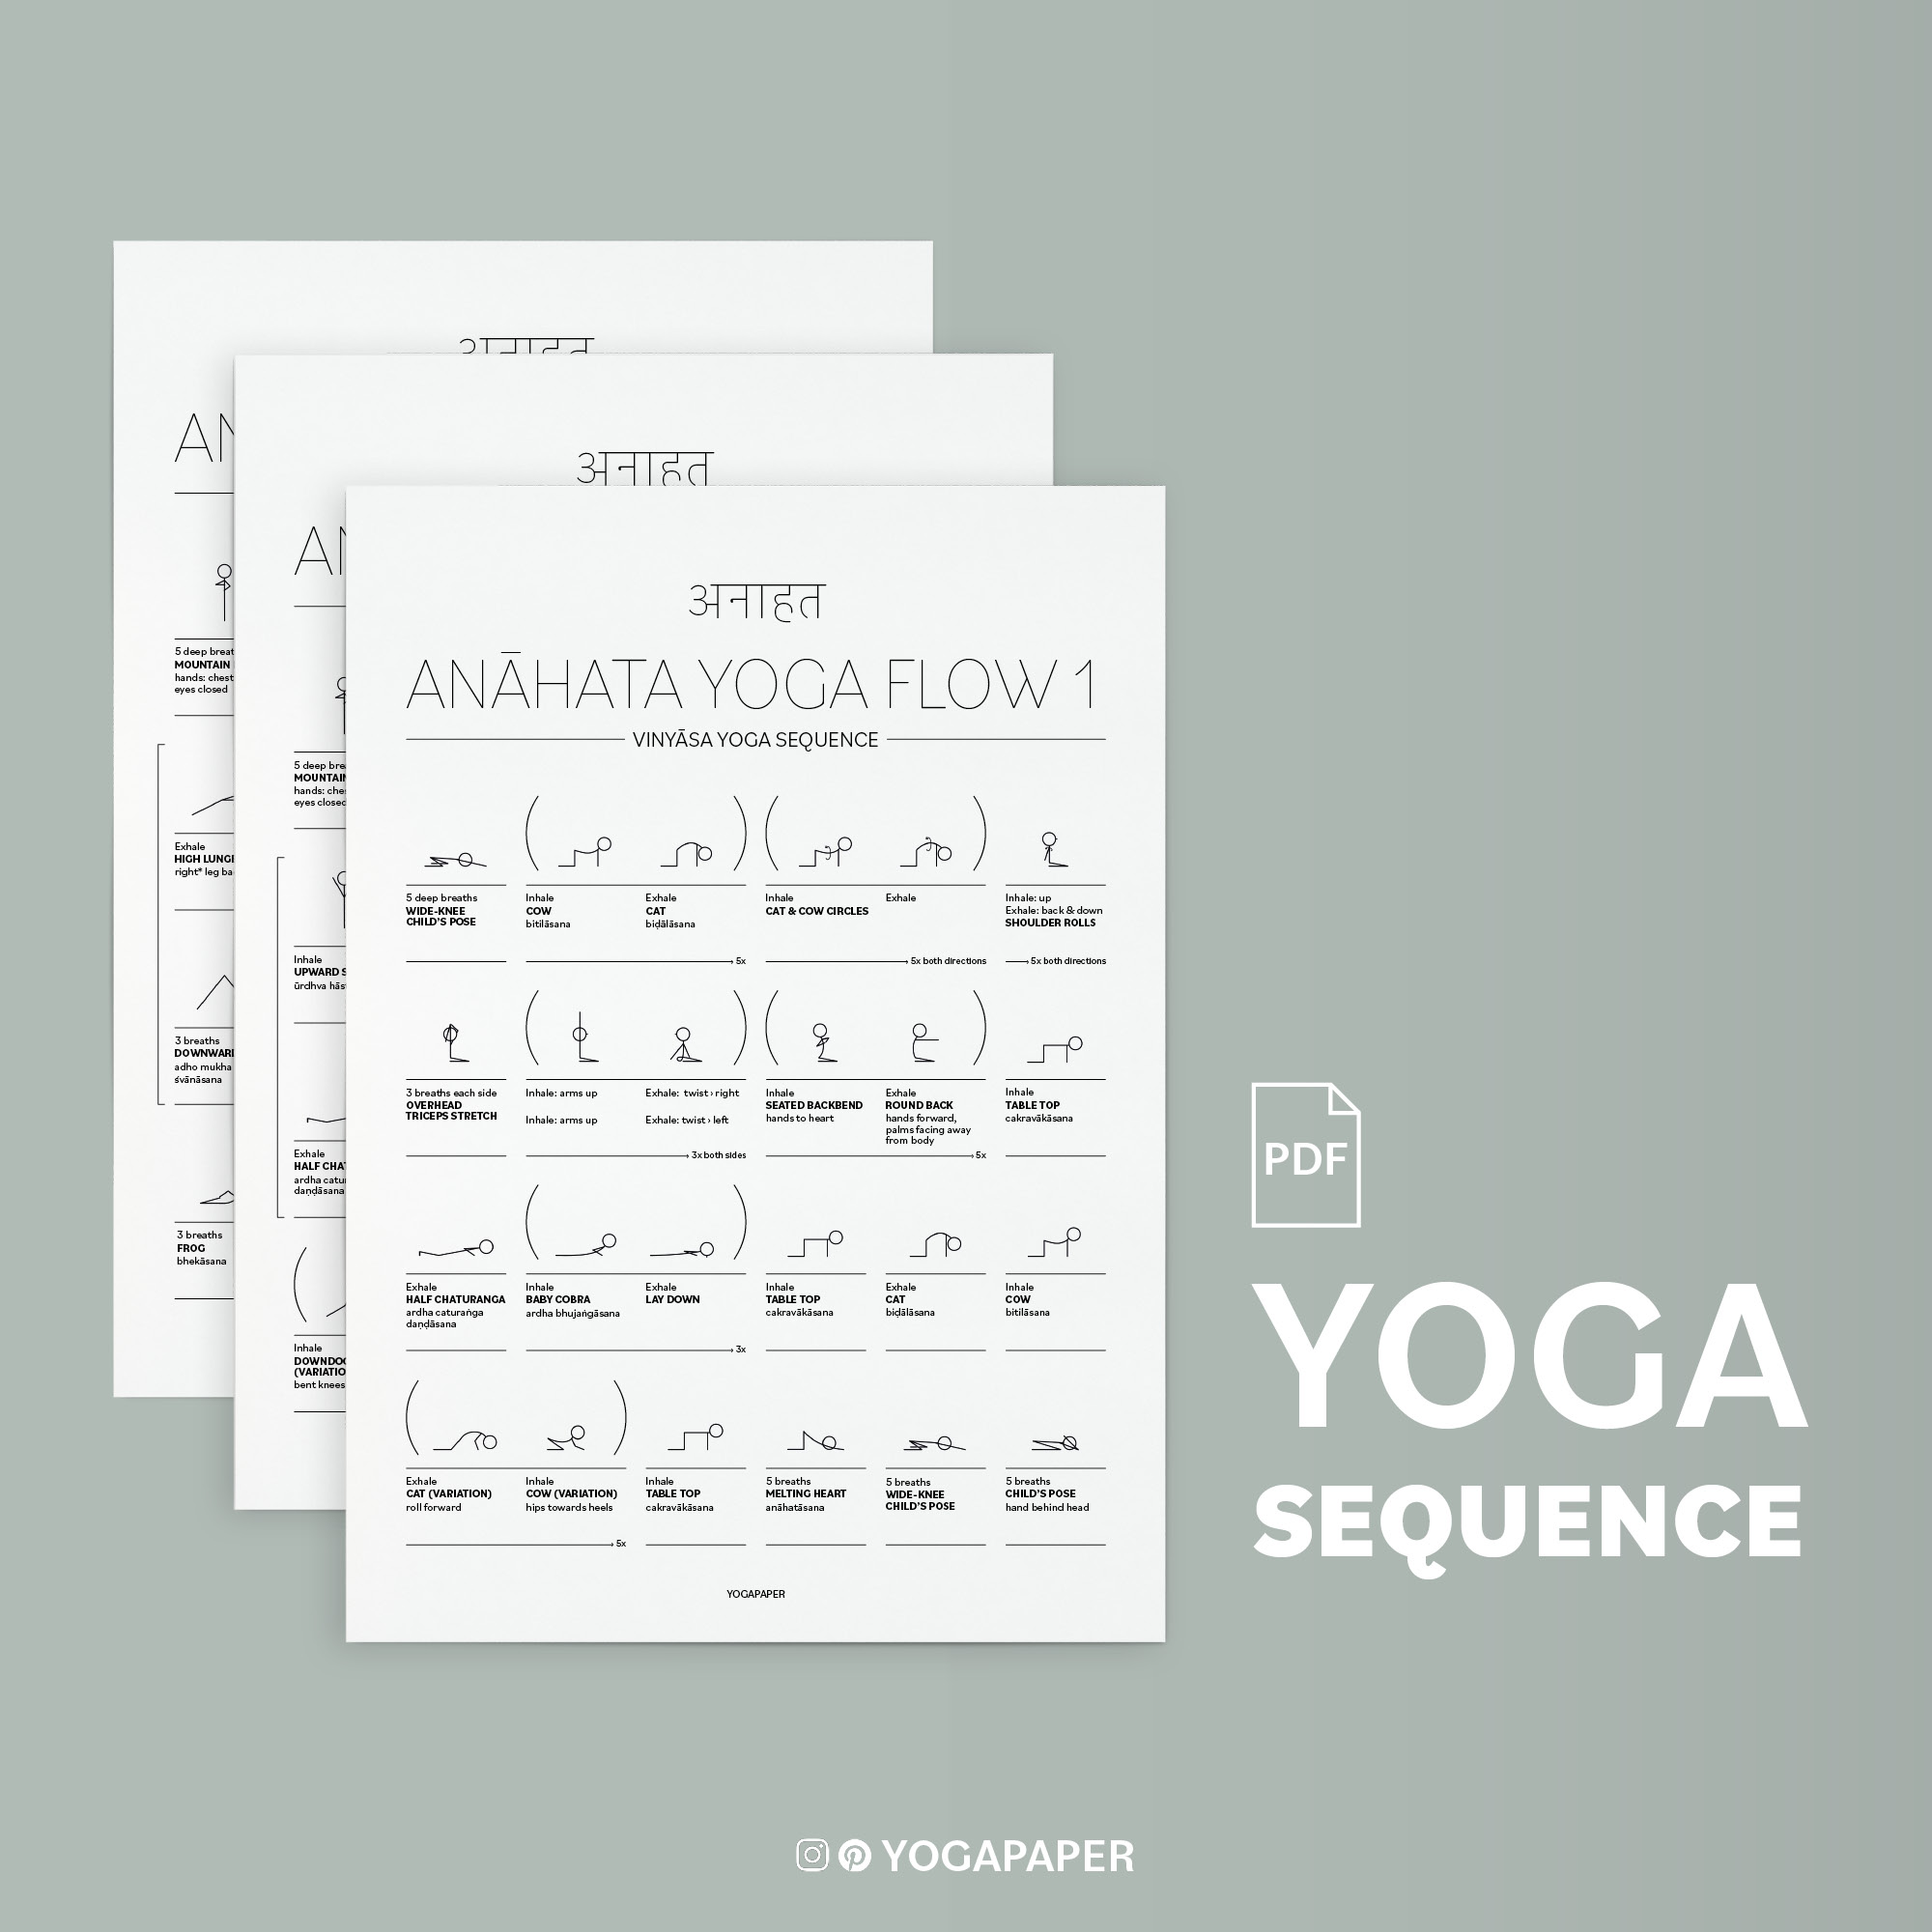 https://yogapaper.com/wp-content/uploads/2021/05/Yoga-Sequence-Stick-Figures3.jpg